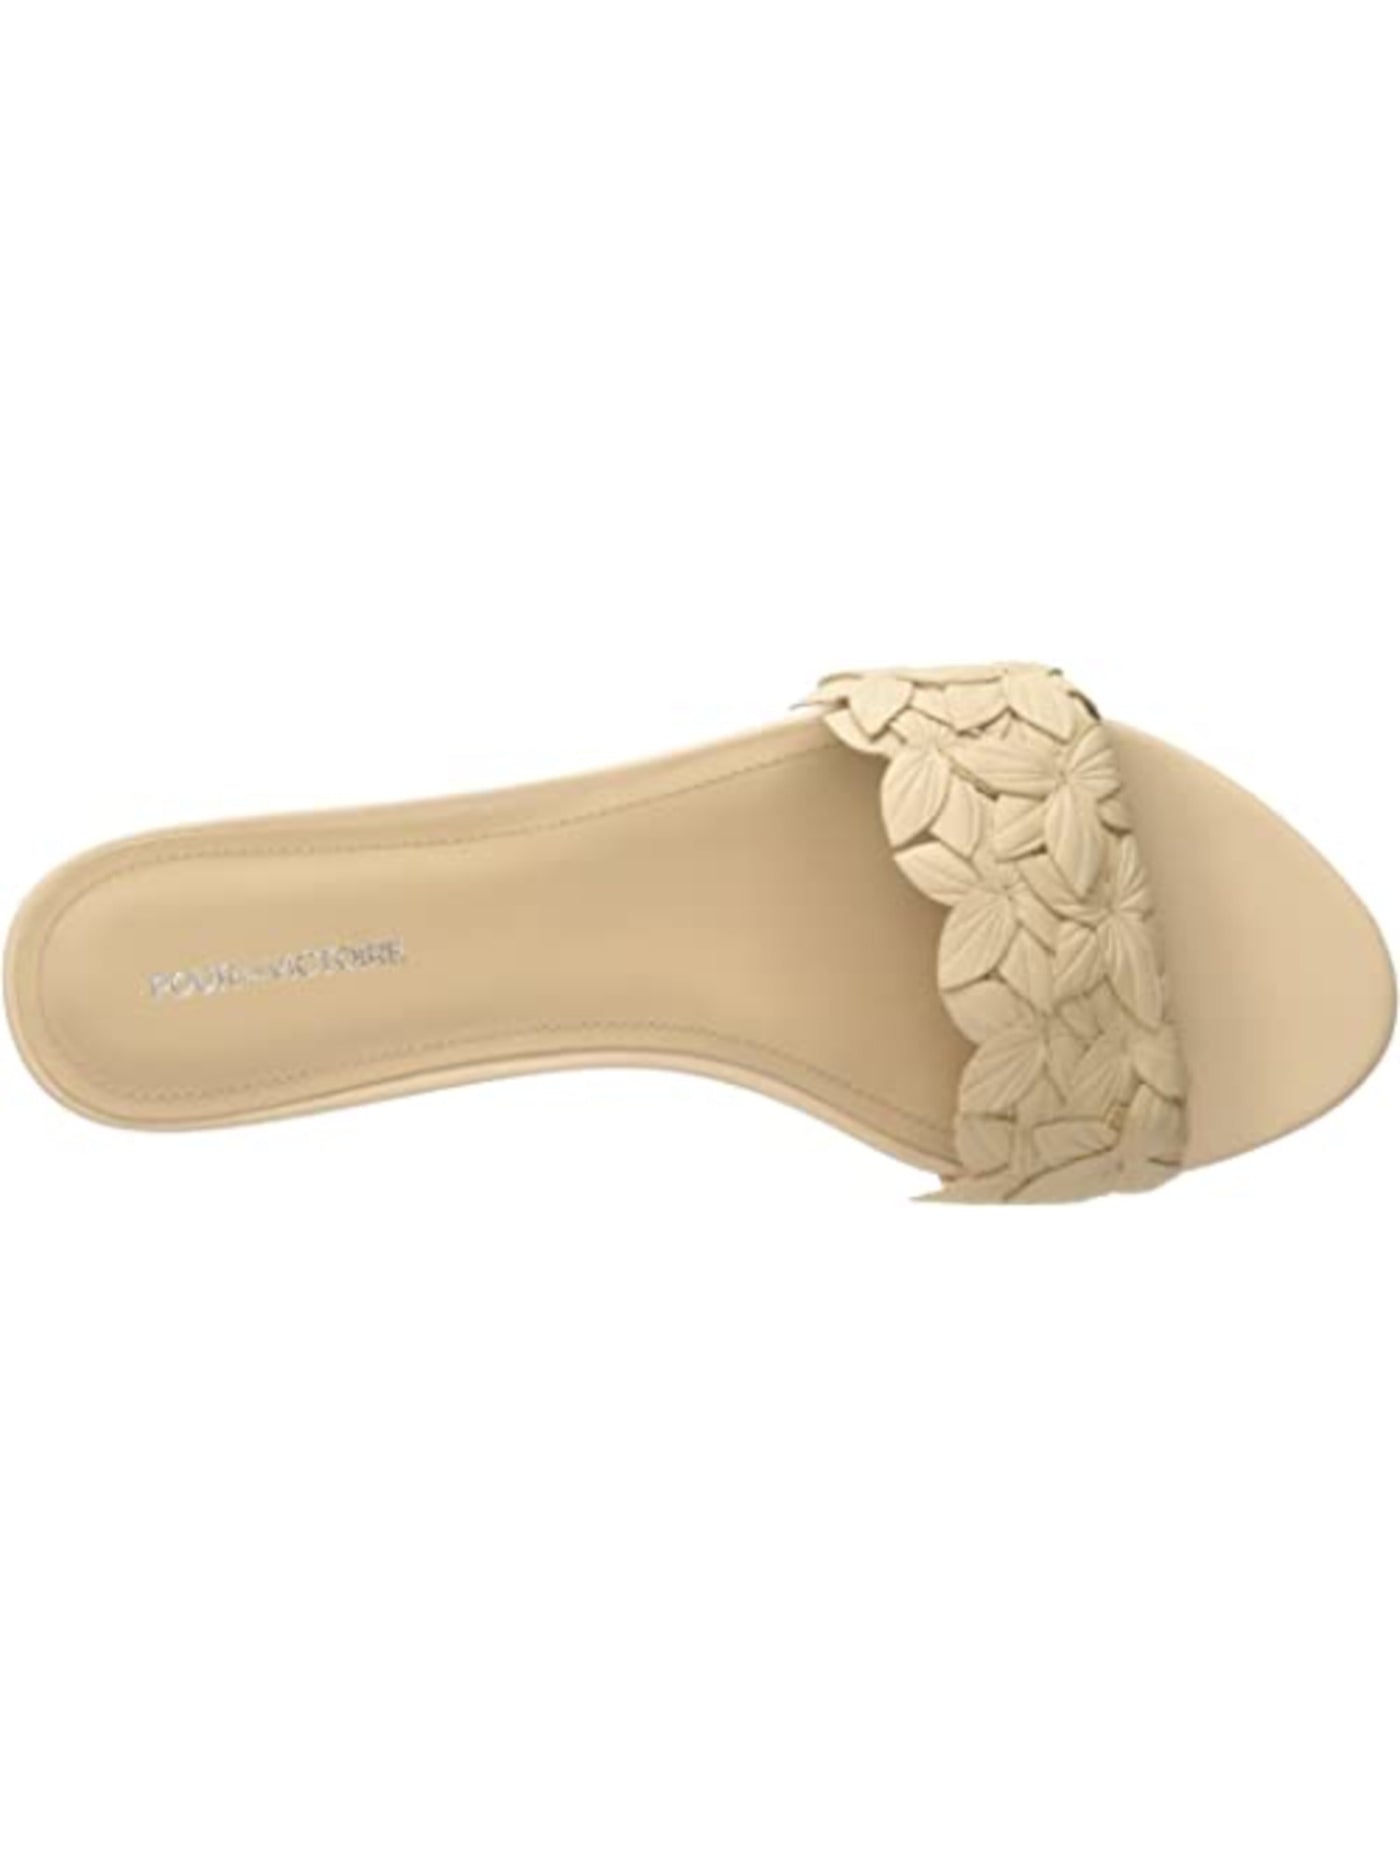 POUR LA VICTOIRE Womens Beige Floral Padded Comfort Lani Almond Toe Block Heel Slide Leather Slide Sandals Shoes M